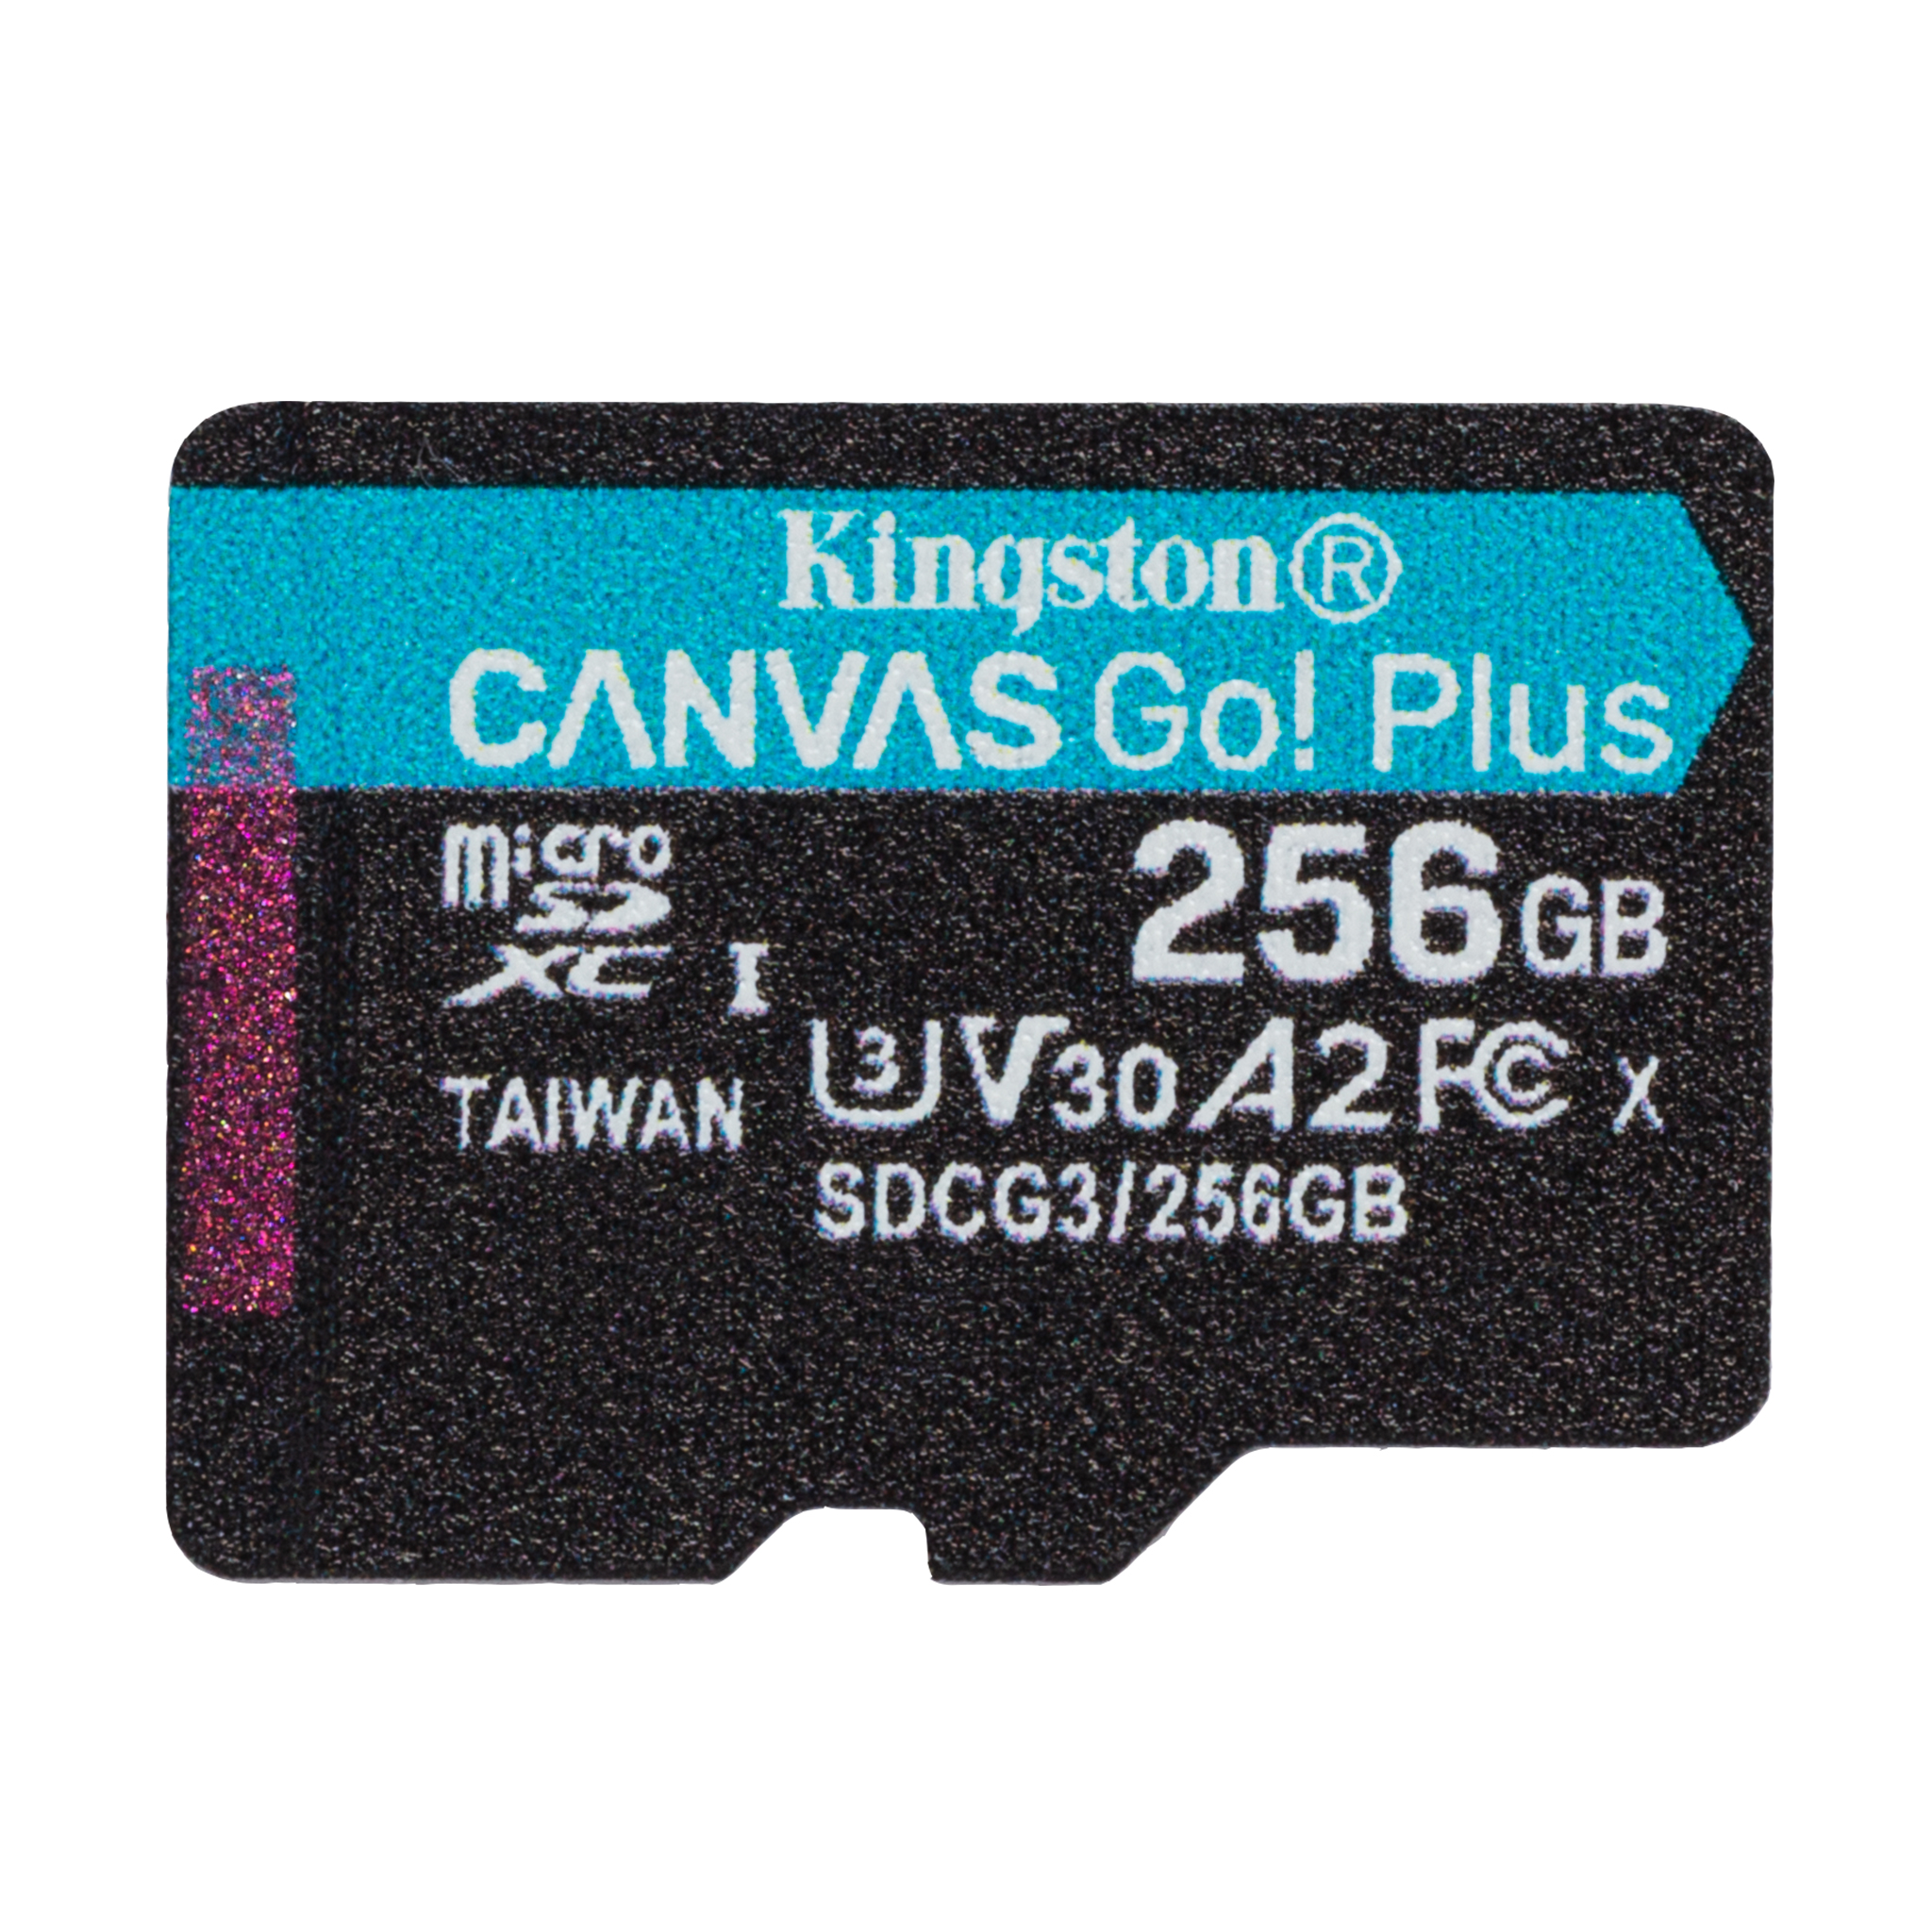 8 GB MicroSDHC Micro SD Speicherkarte mit SD-Adapter Kingston Cl 4 Highspeed